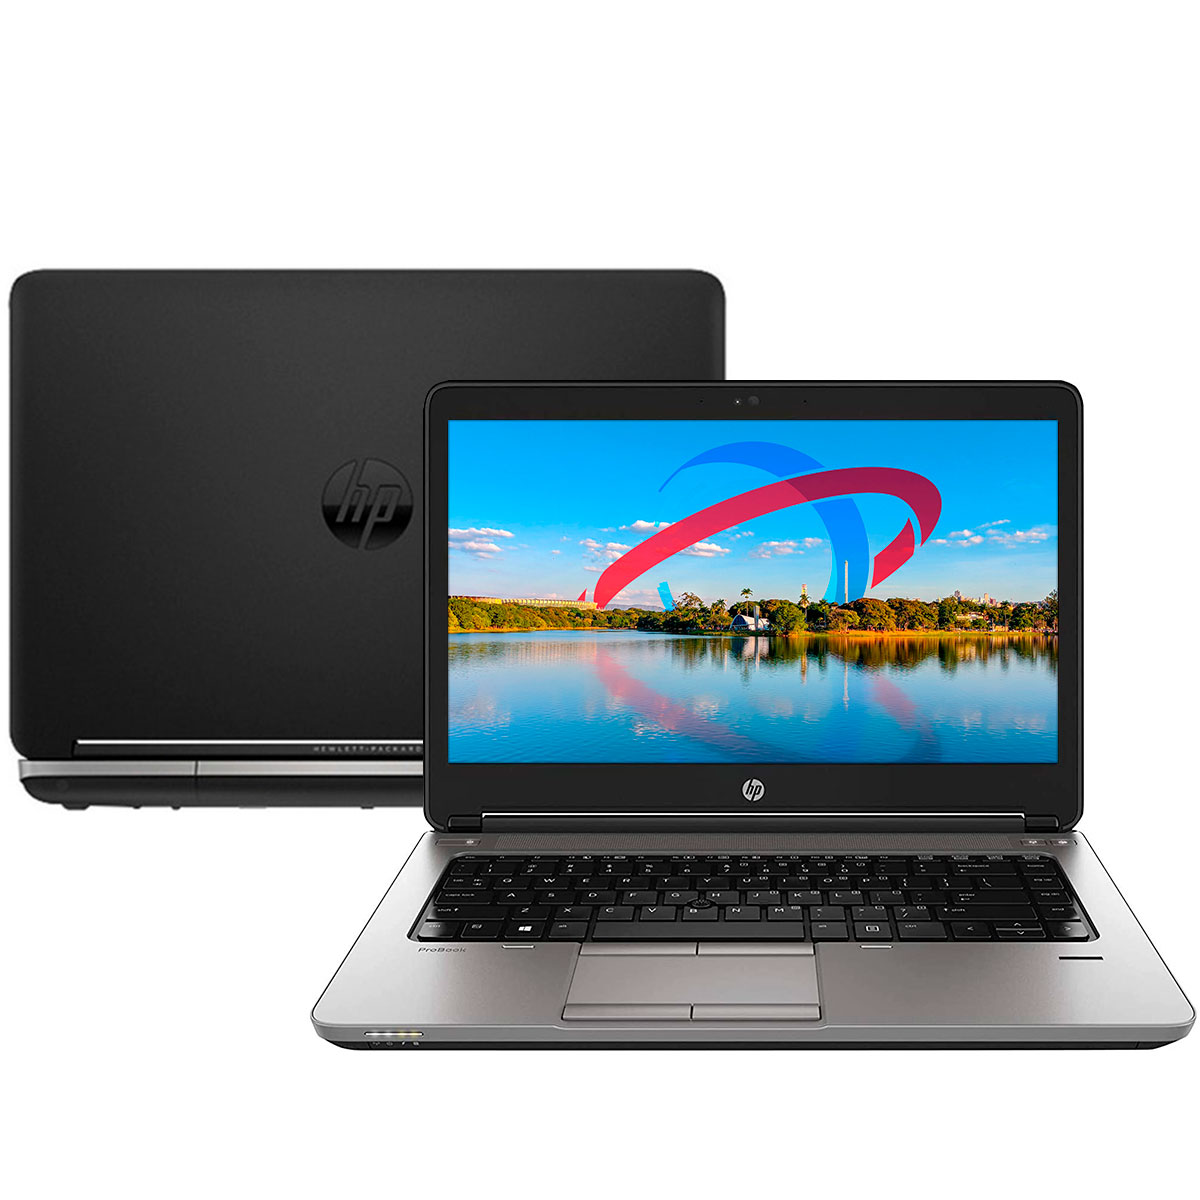 Notebook HP ProBook 645 G1 - AMD A10, RAM 8GB, SSD 240GB, Tela 14